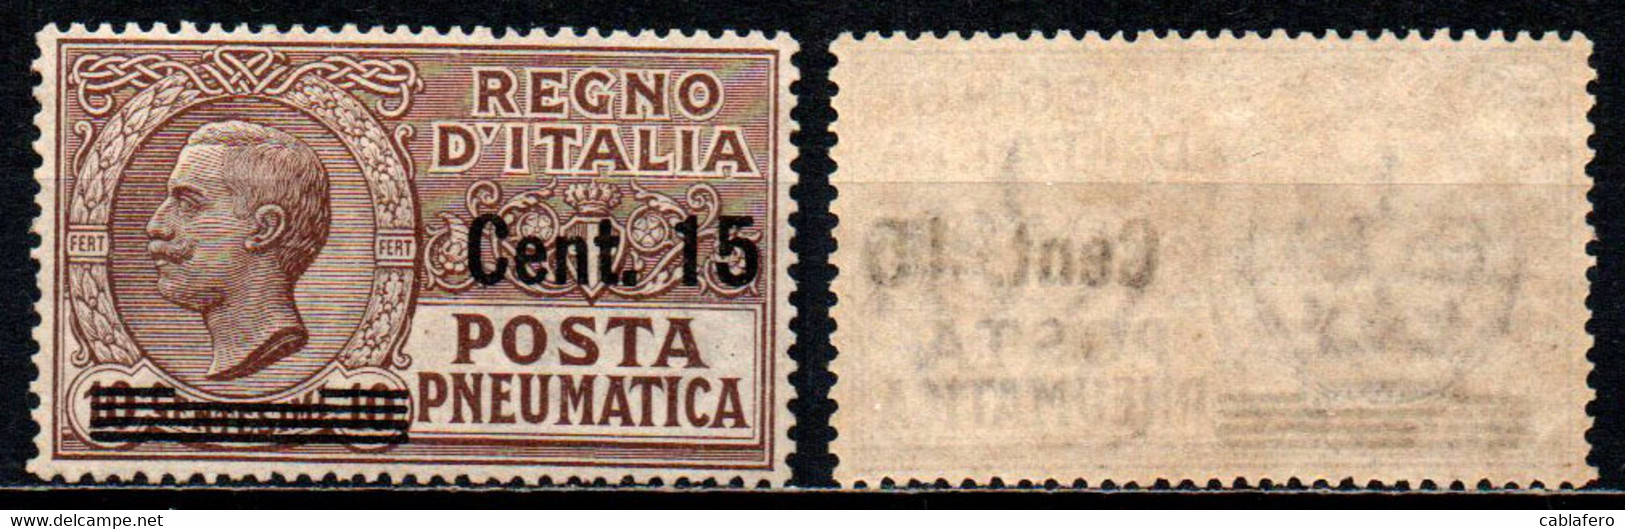 ITALIA REGNO - 1924 - EFFIGIE DI VITTORIO EMANUELE III - SOPRASTAMPA DA 15 CENT. SU 10 CENT. - MNH - Rohrpost